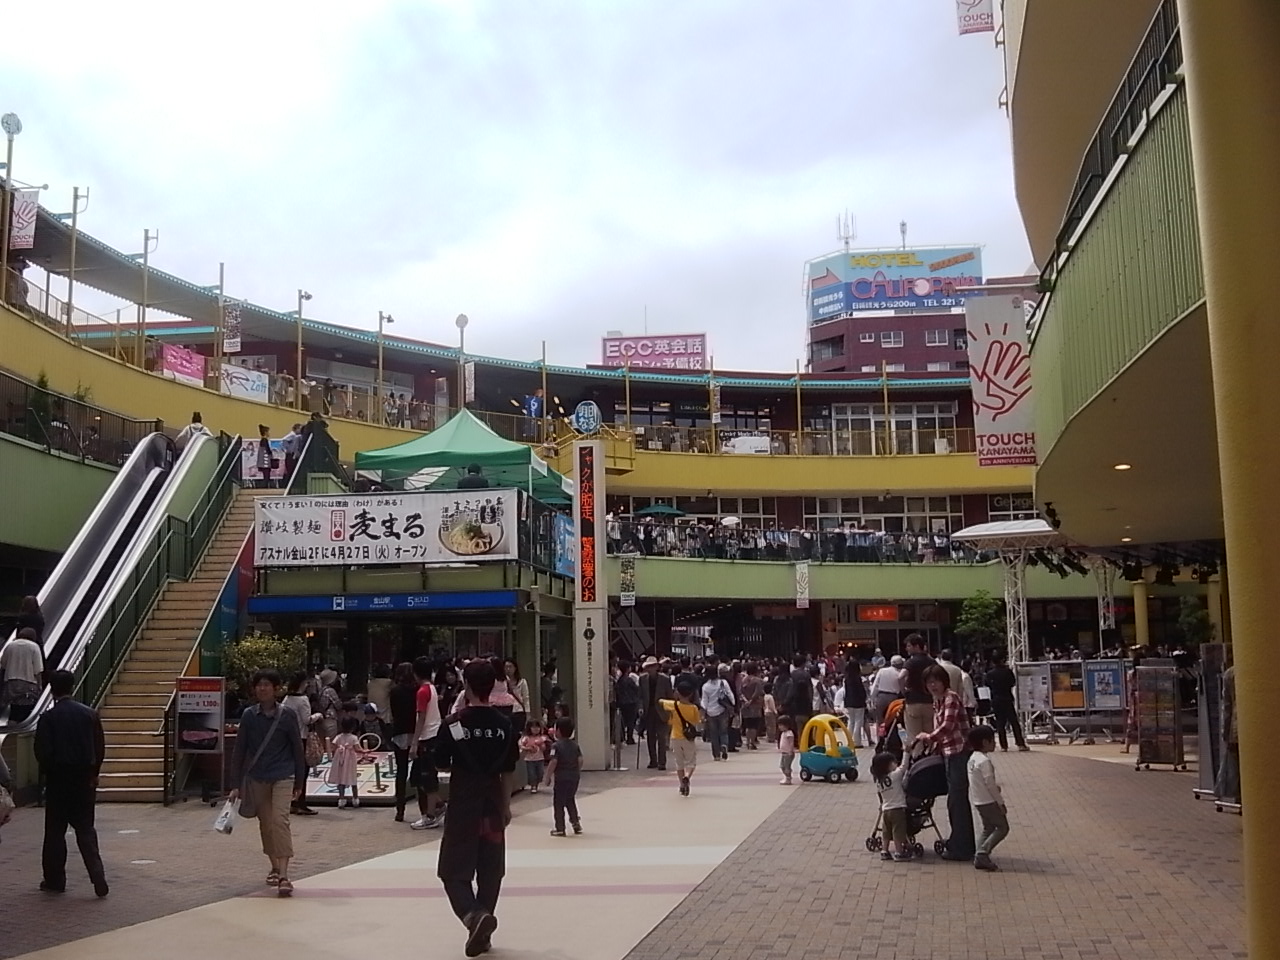 Shopping centre. 372m to Arsenal Kanayama (shopping center)